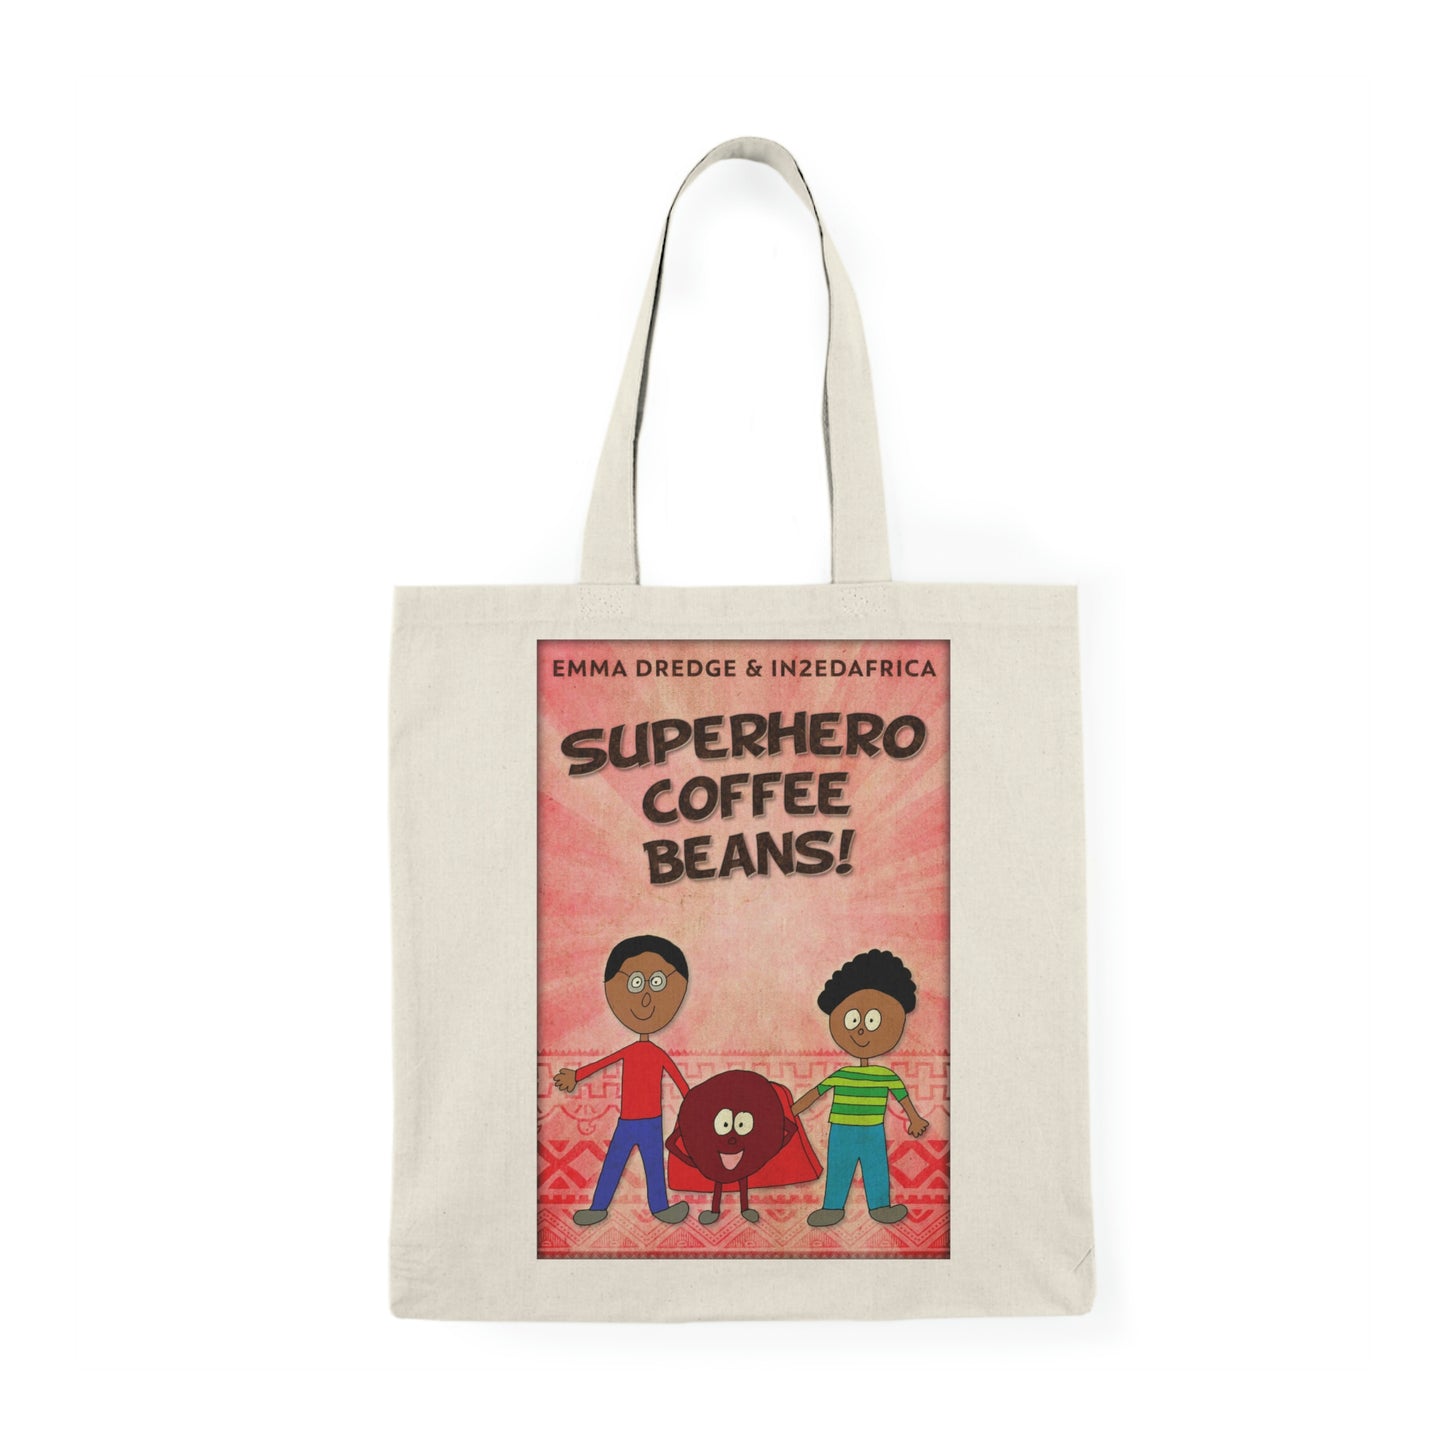 Superhero Coffee Beans! - Natural Tote Bag